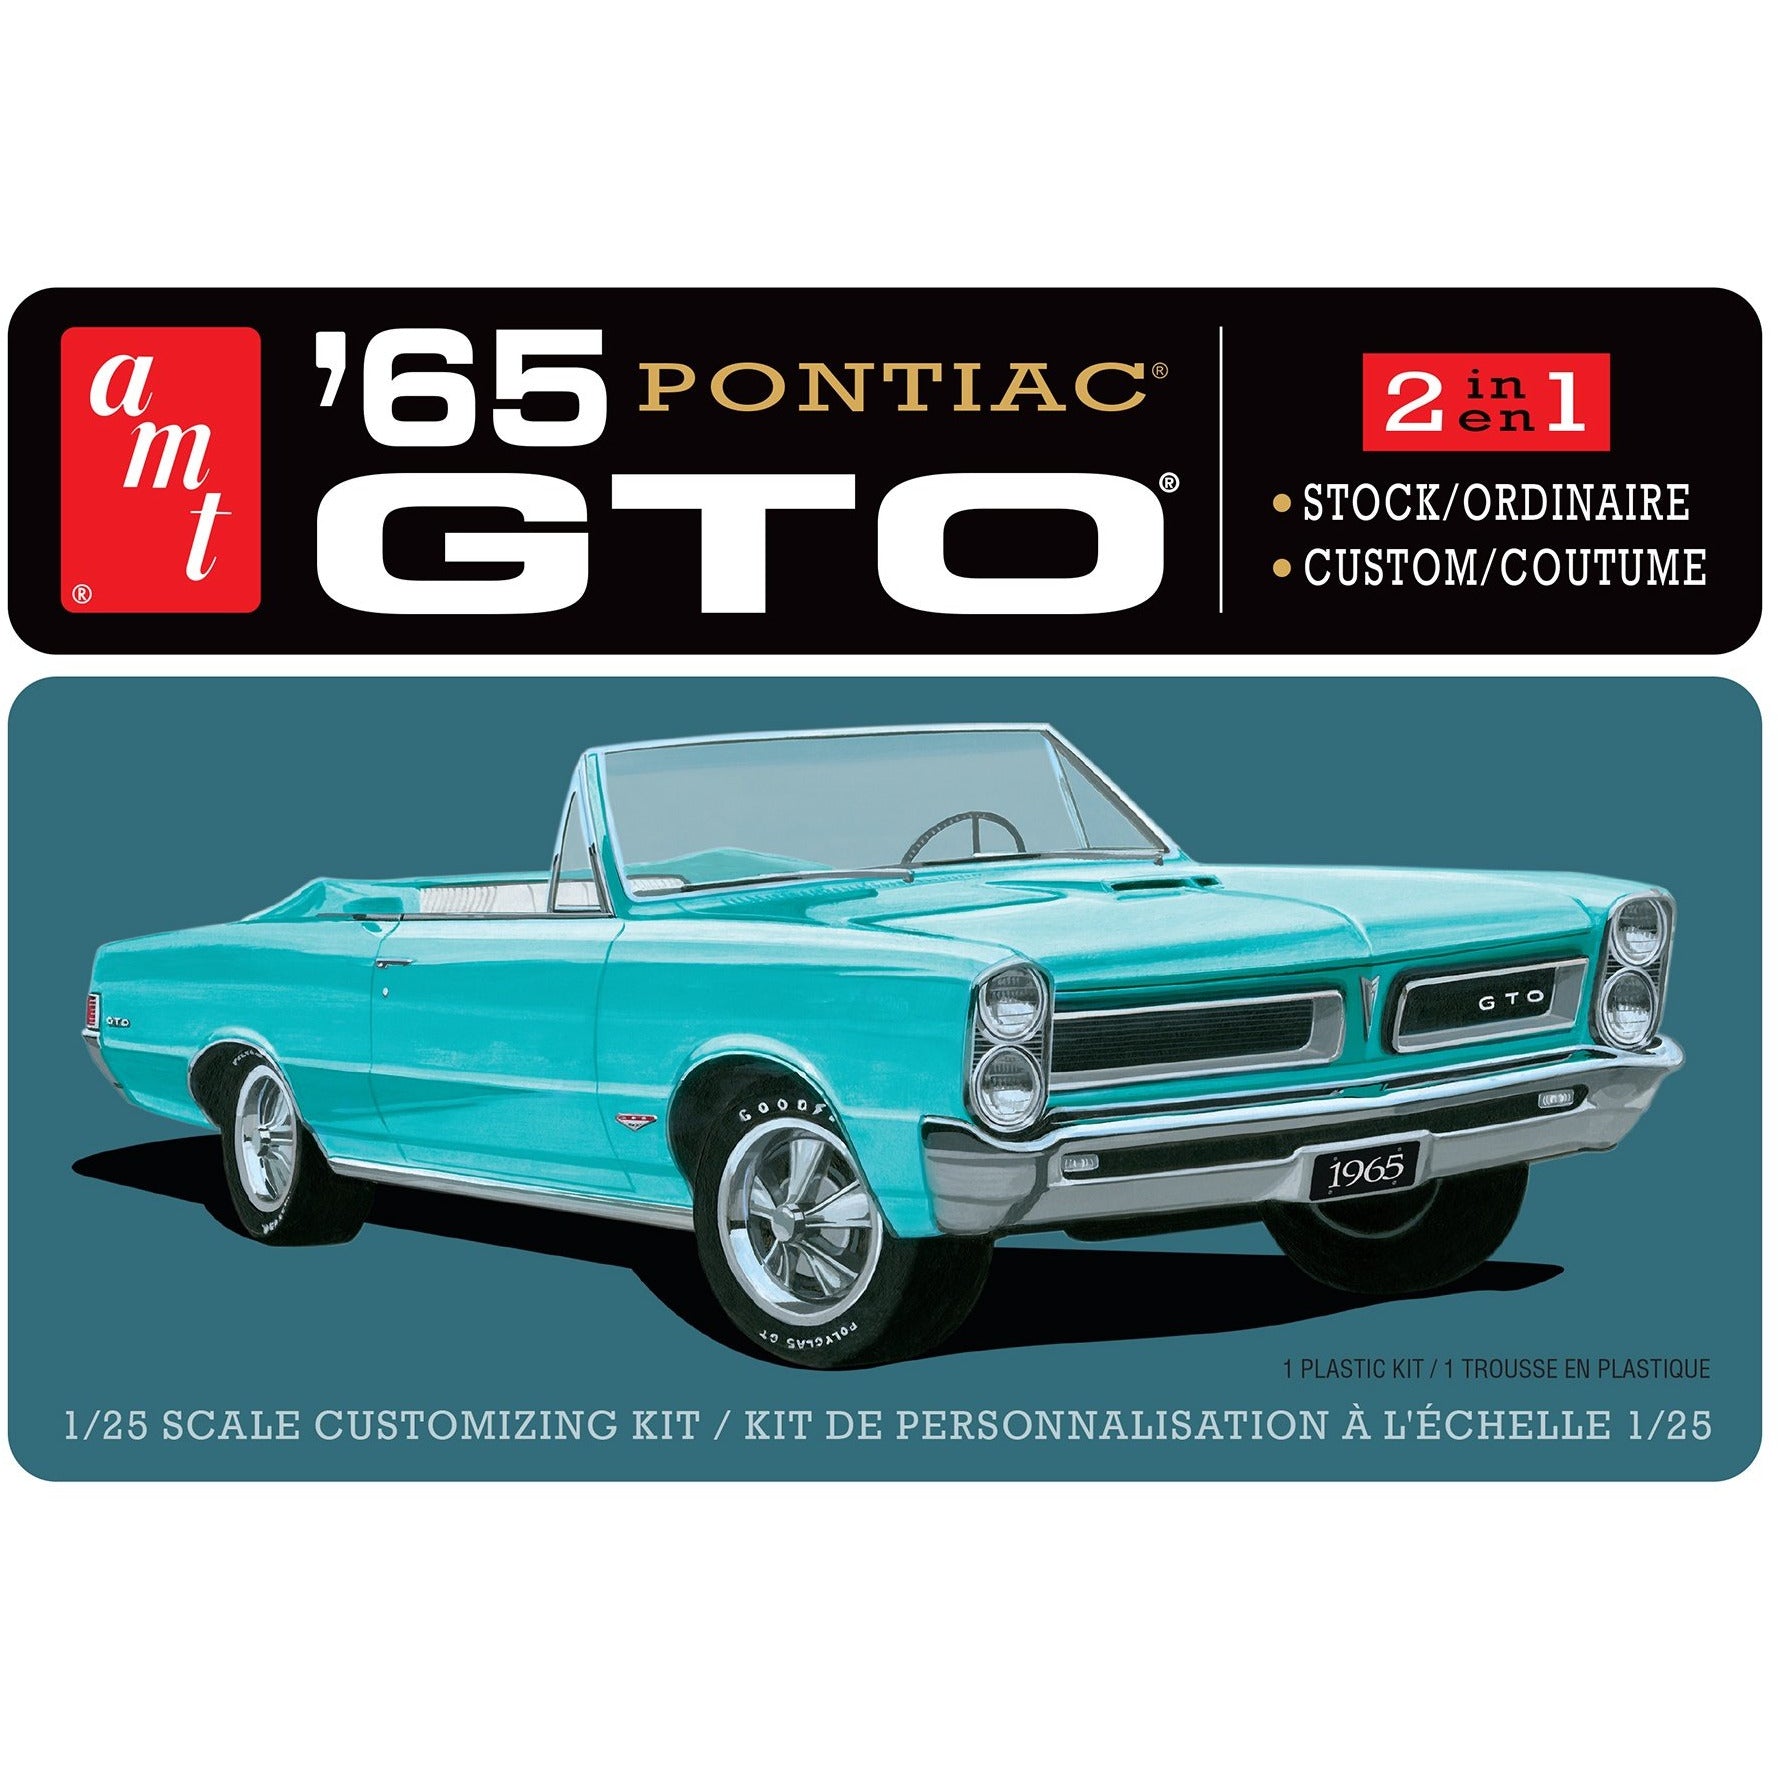 1965 Pontiac GTO 2-in-1 1/25 Model Car Kit #1191 by AMT